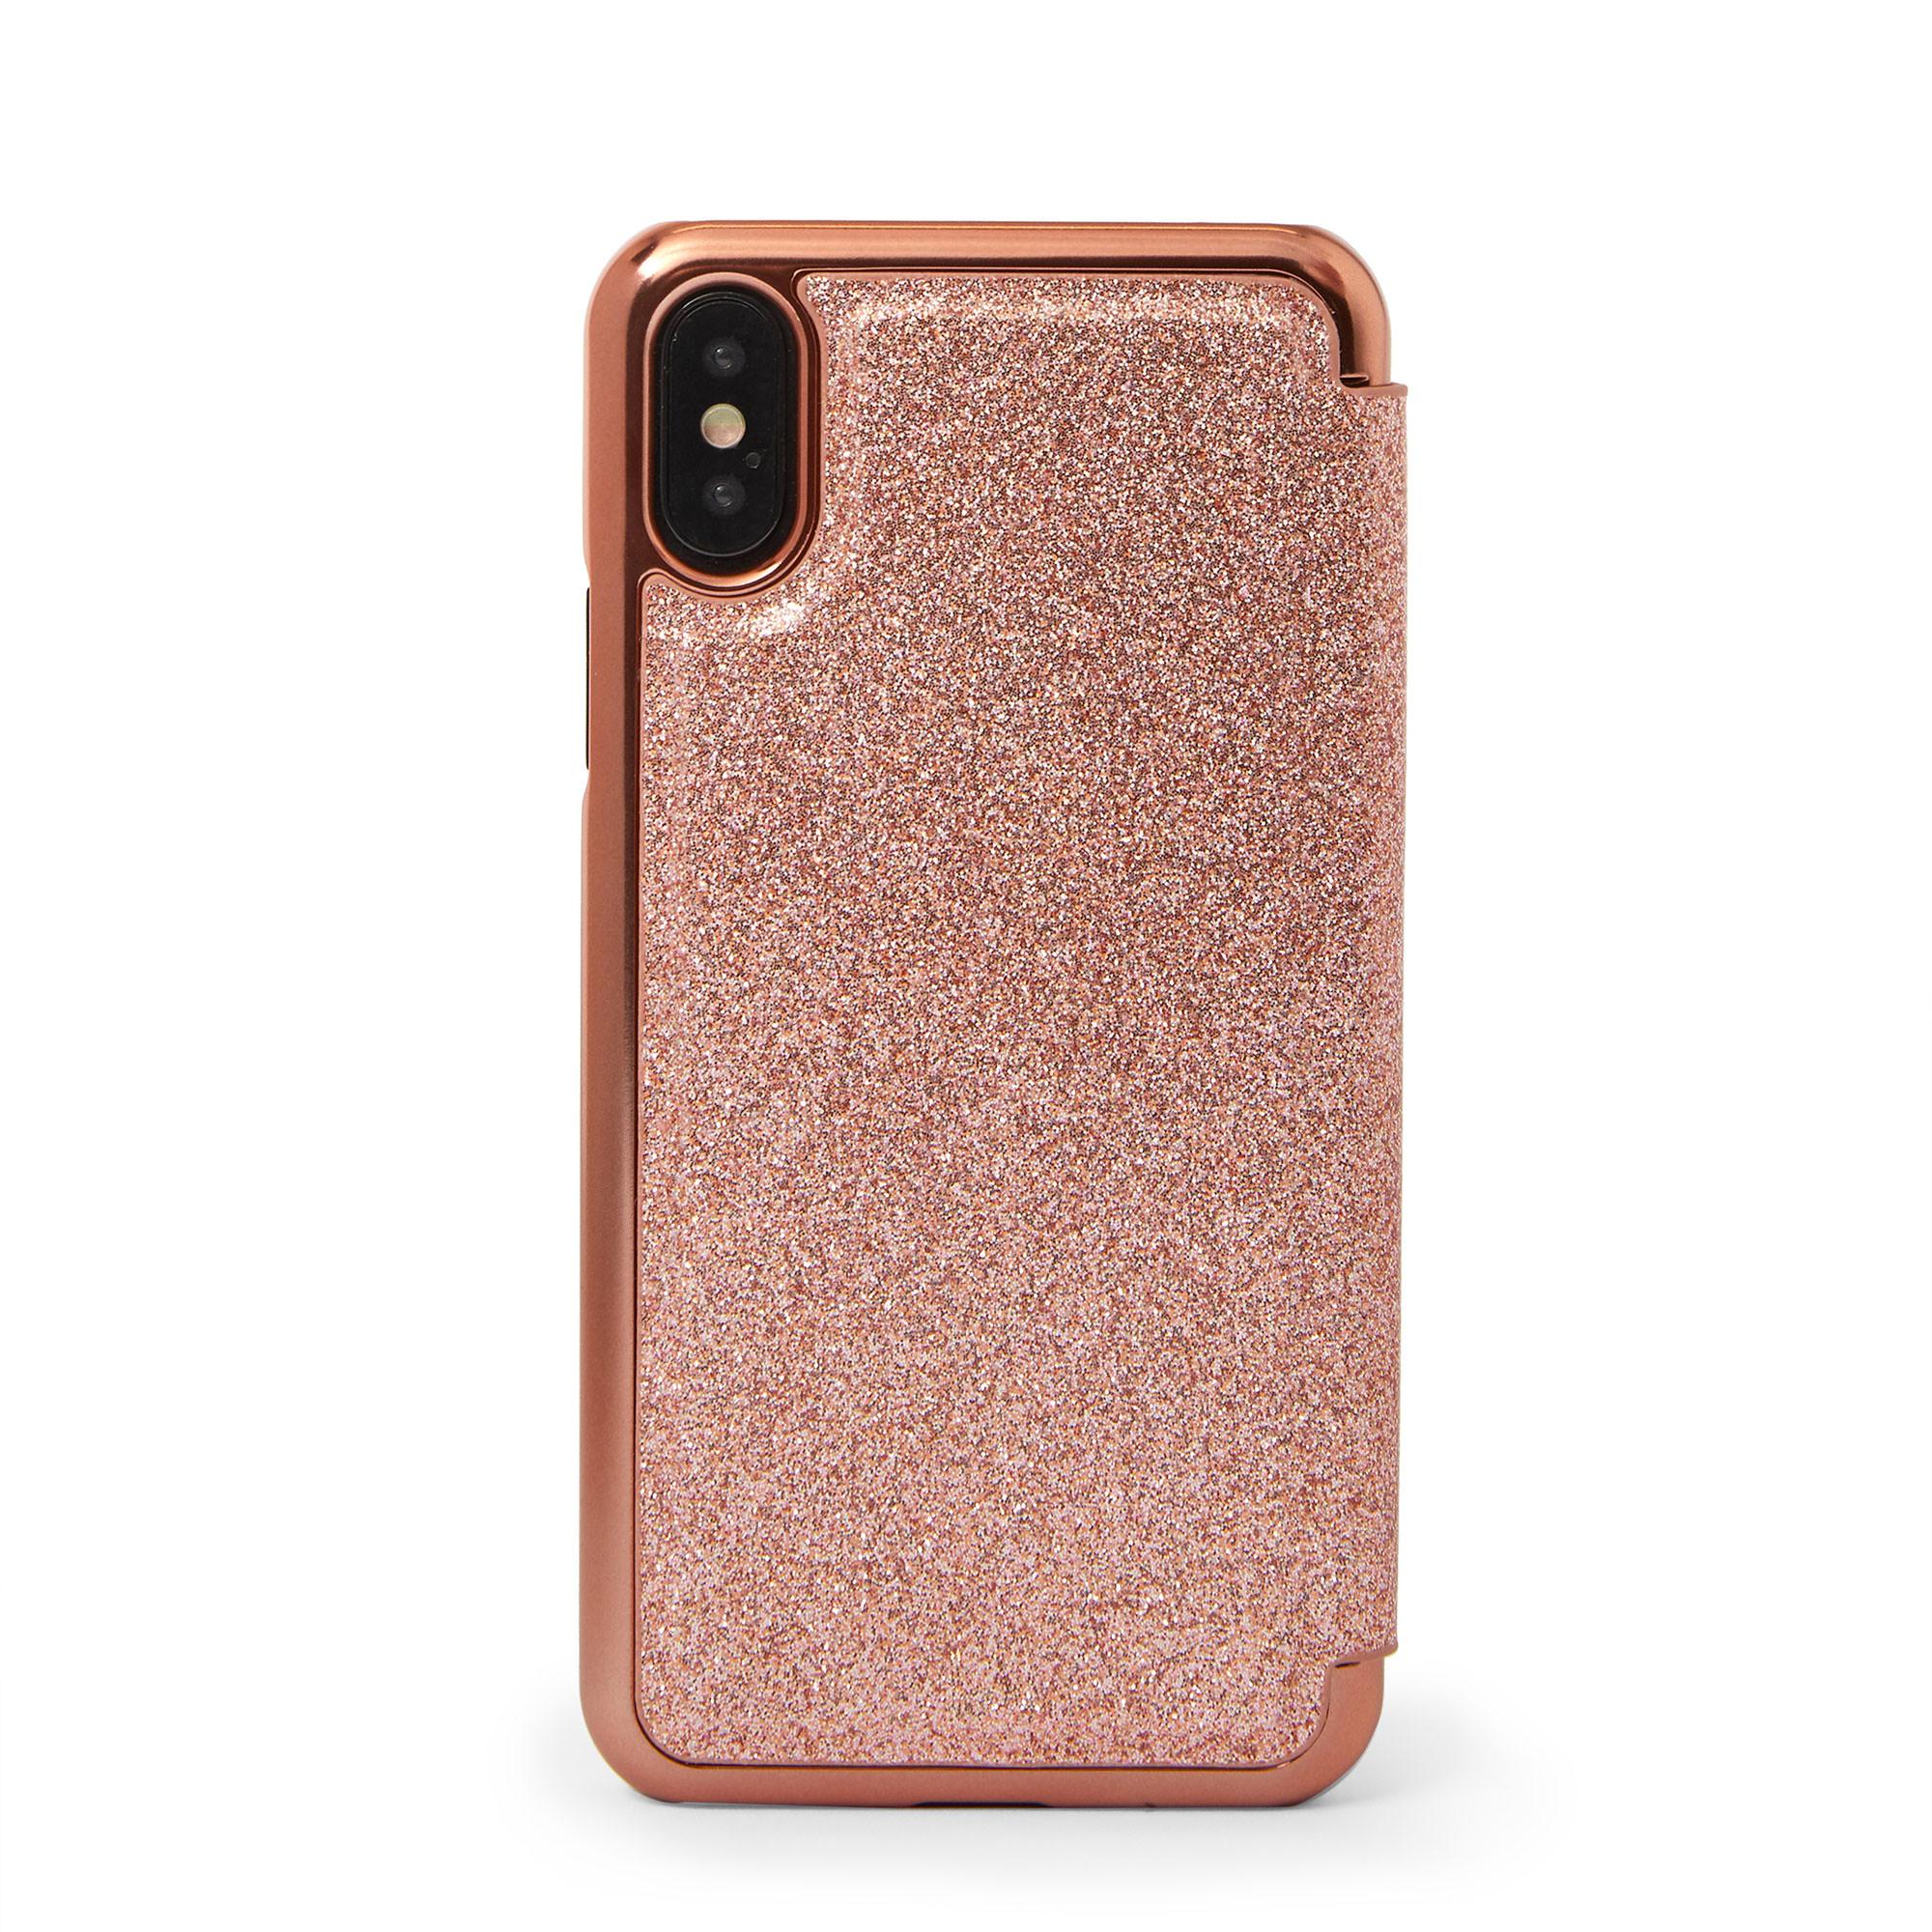 Kazaal Glitter iPhone X Case